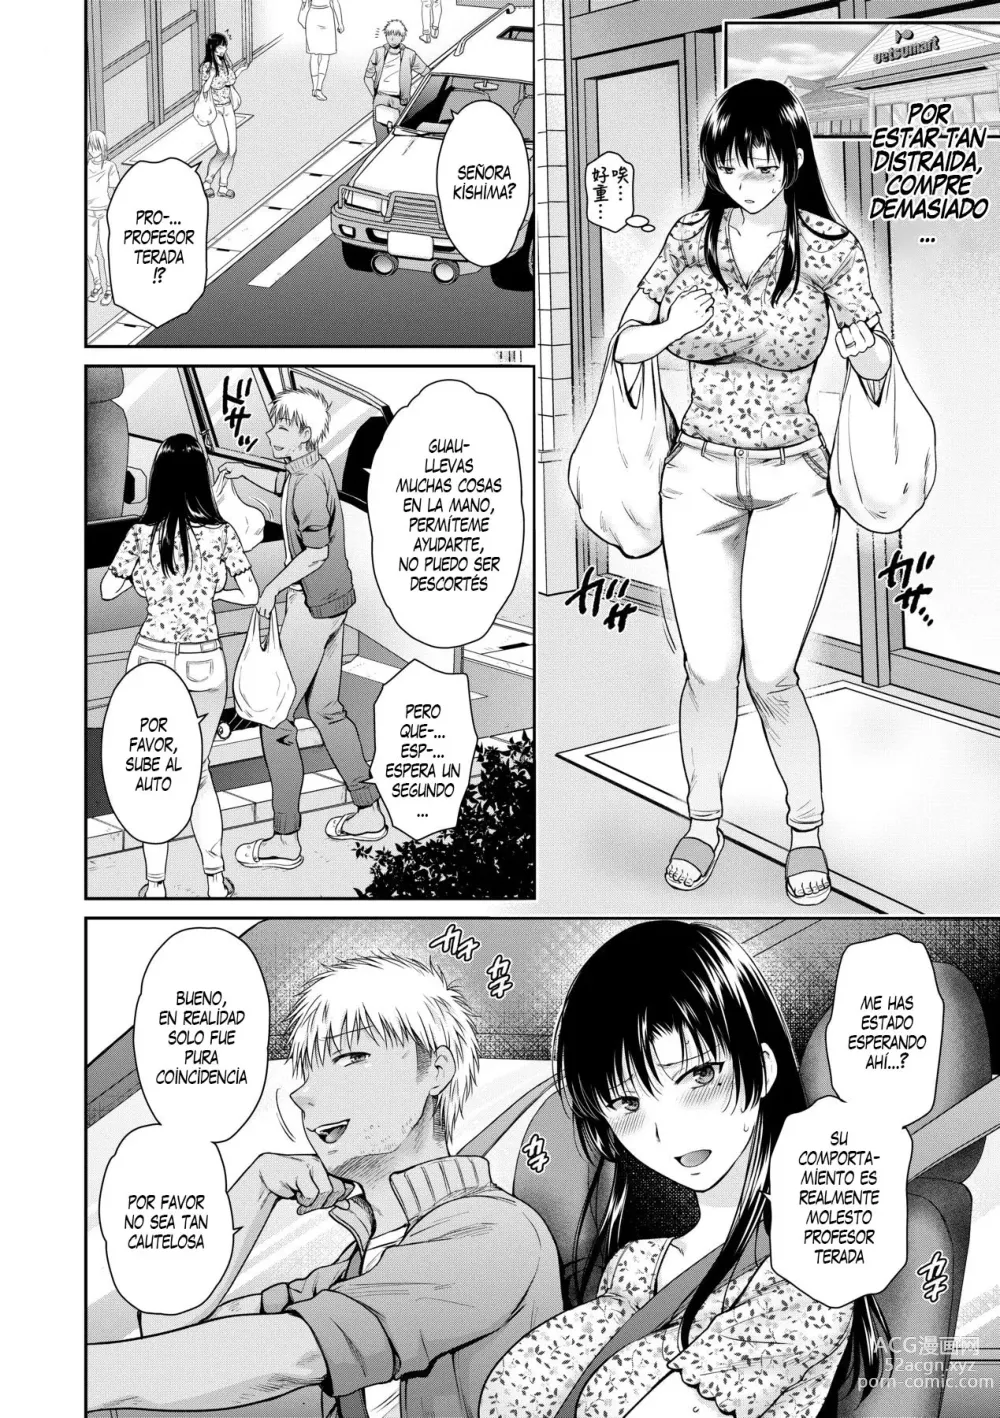 Page 5 of manga Transformando Madre E Hija Parte 3